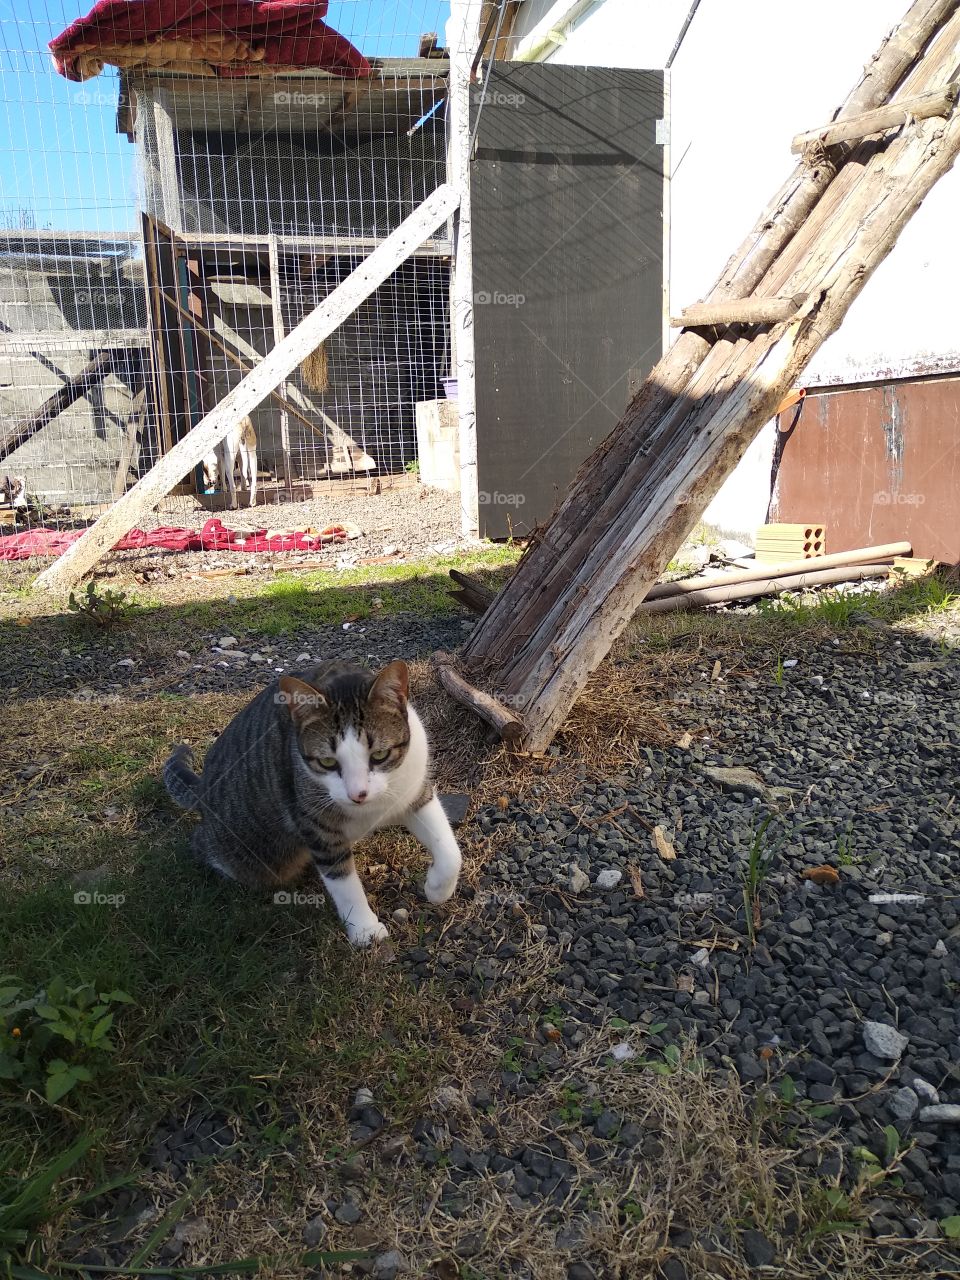 cat sitting catio sunny day